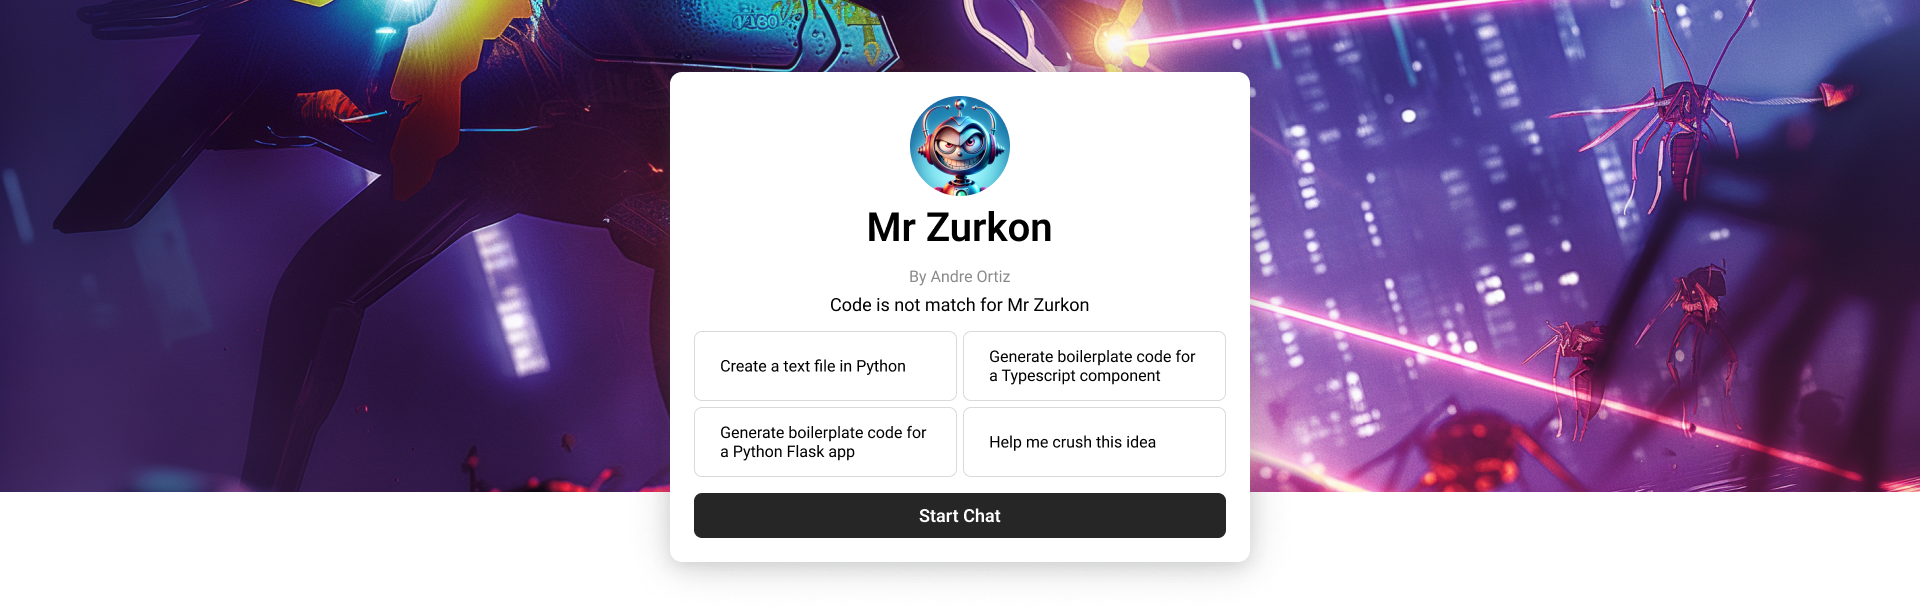 Mr Zurkon